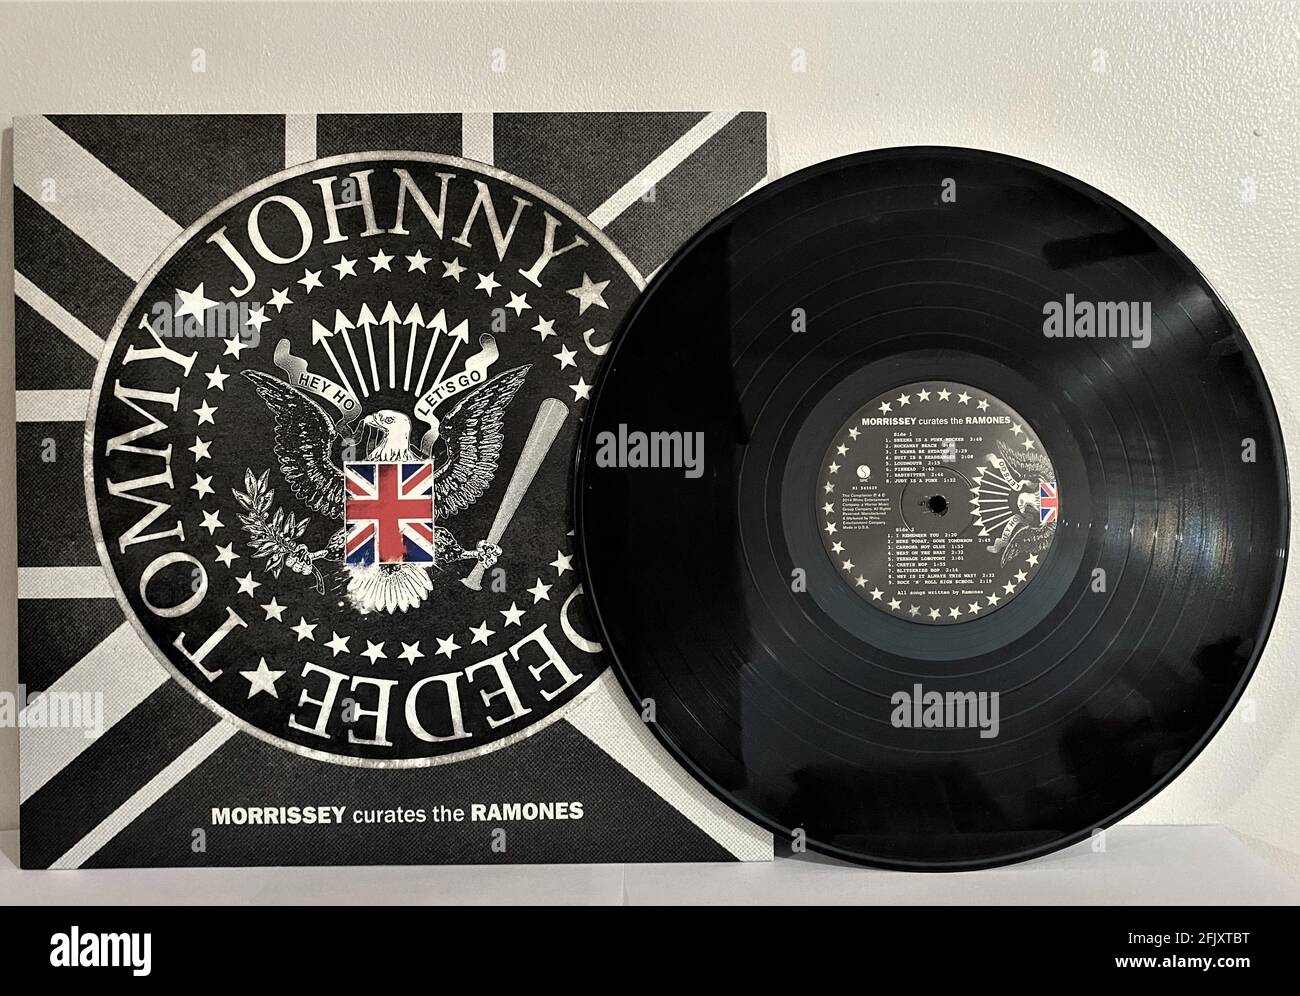 Punk rock band,The Ramones, music album on vinyl record LP disc Stock Photo  - Alamy